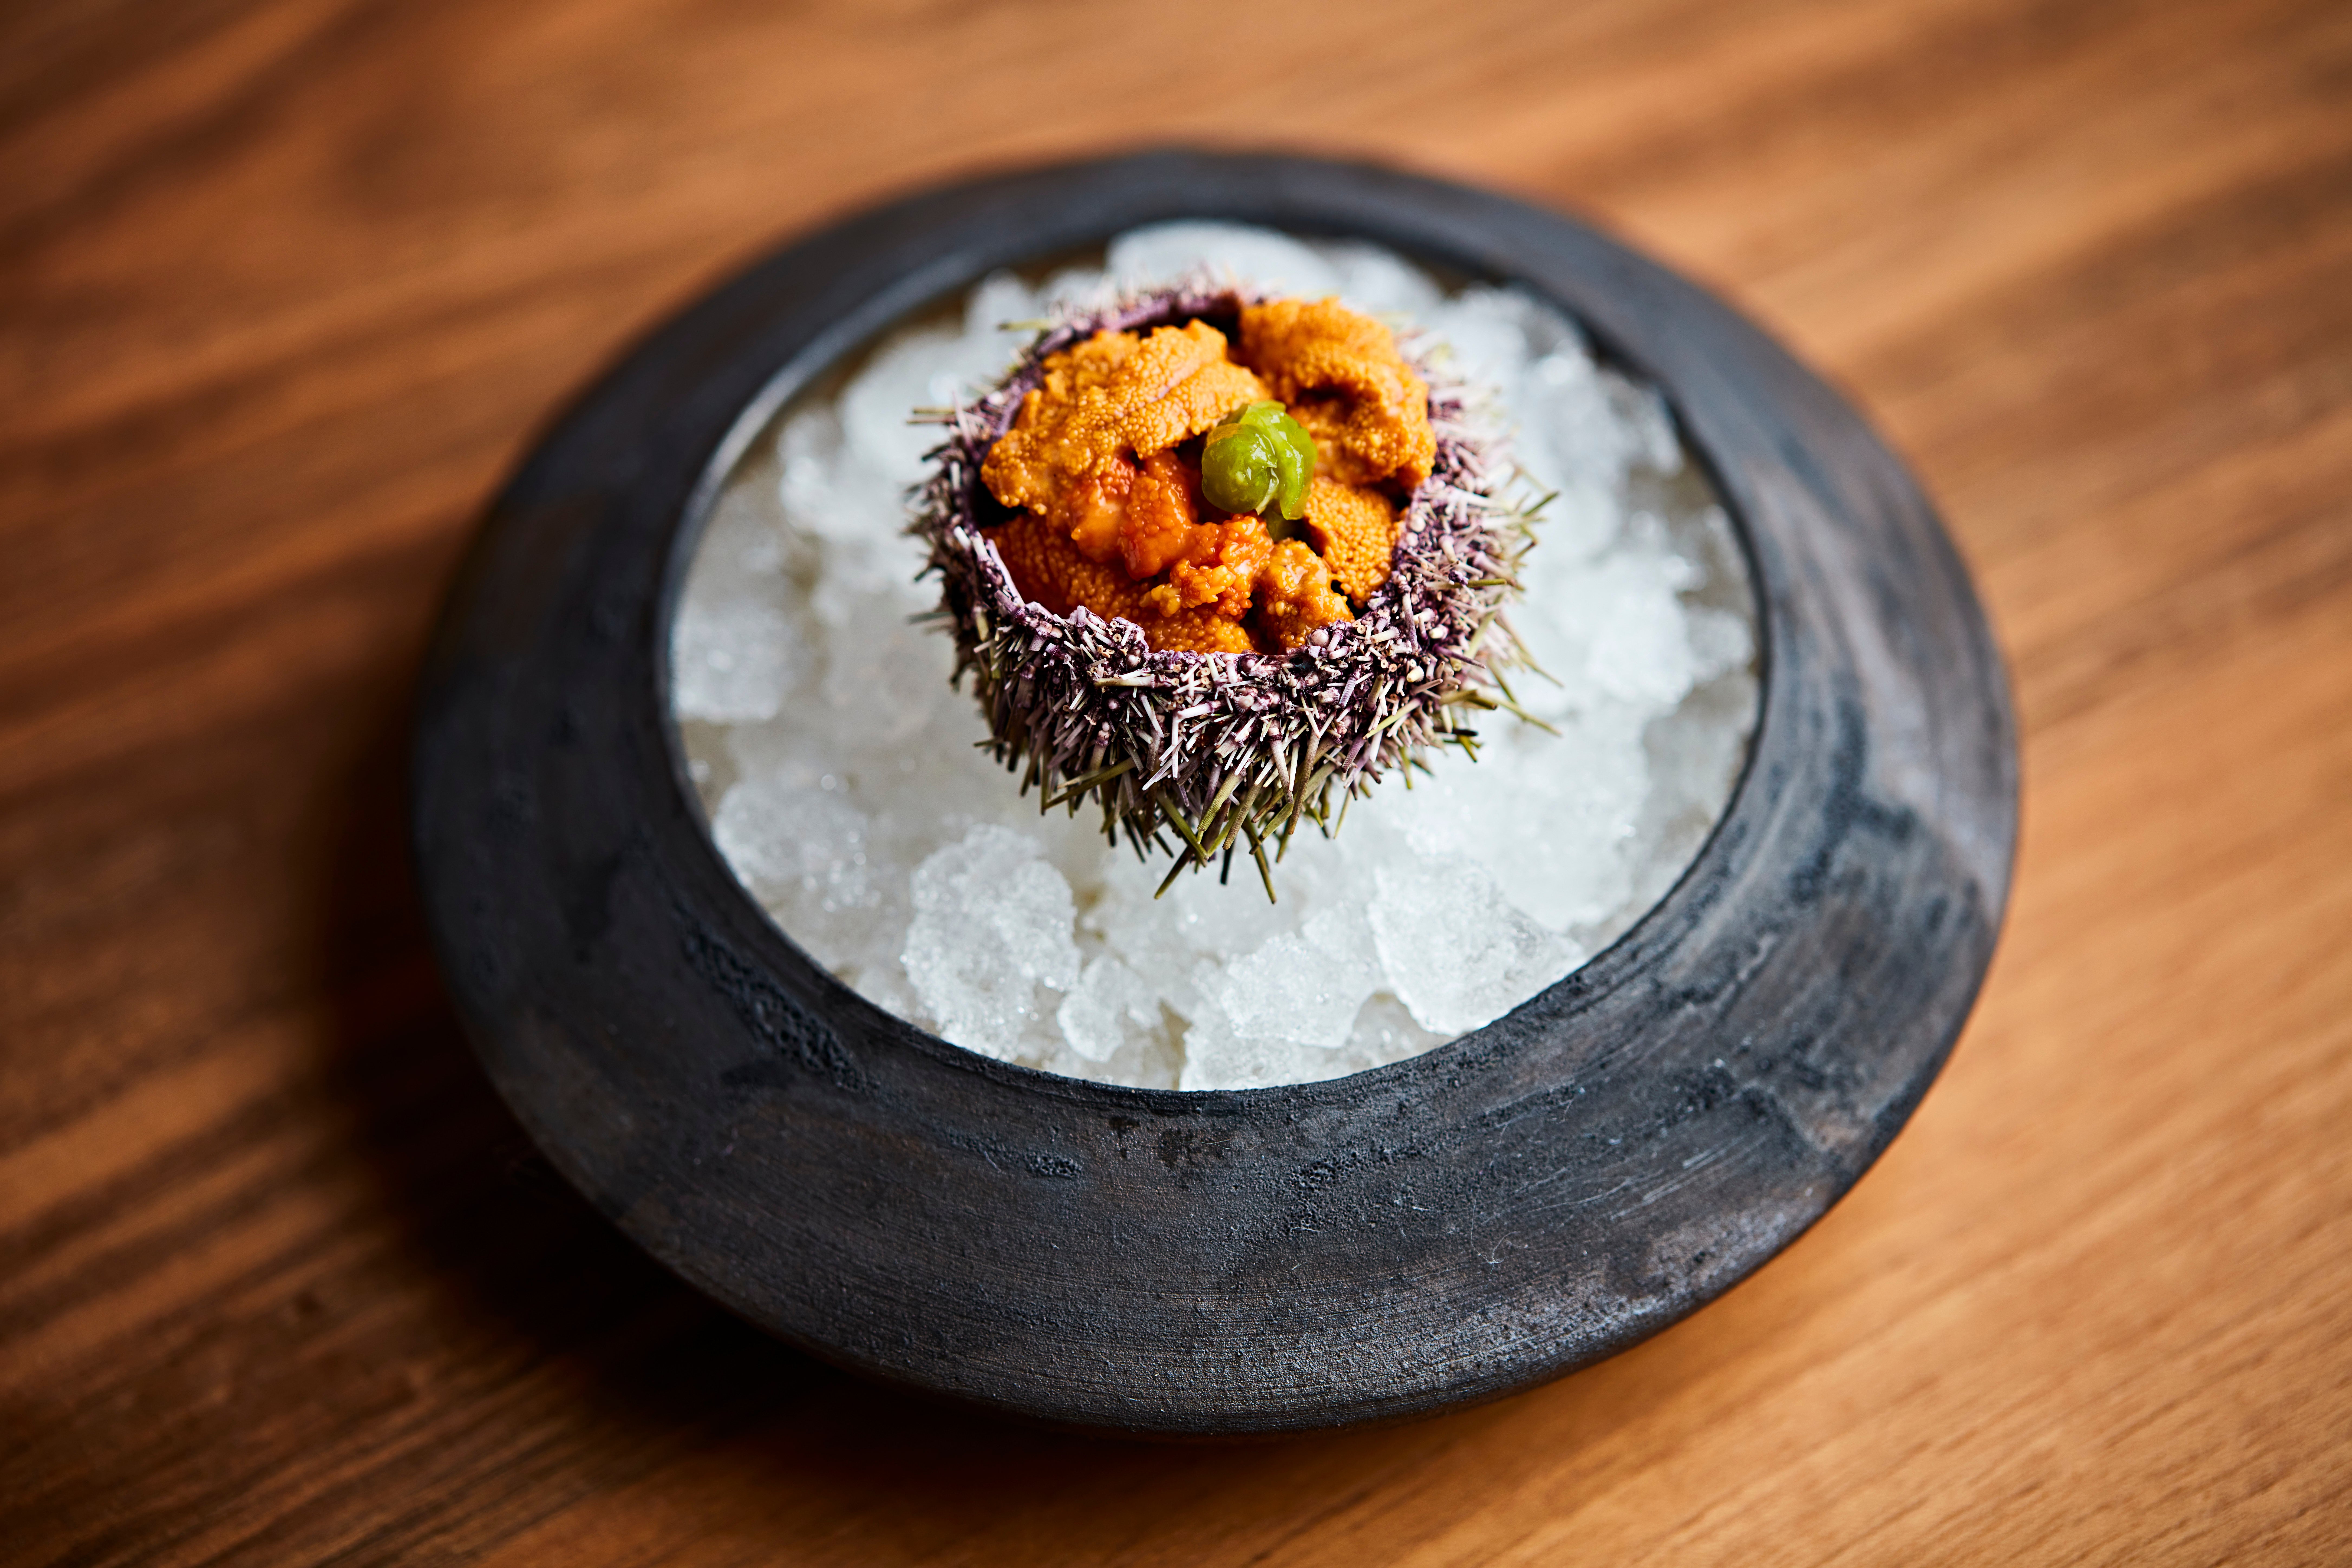 Uni (sea urchin) served raw in its shell at Mayha